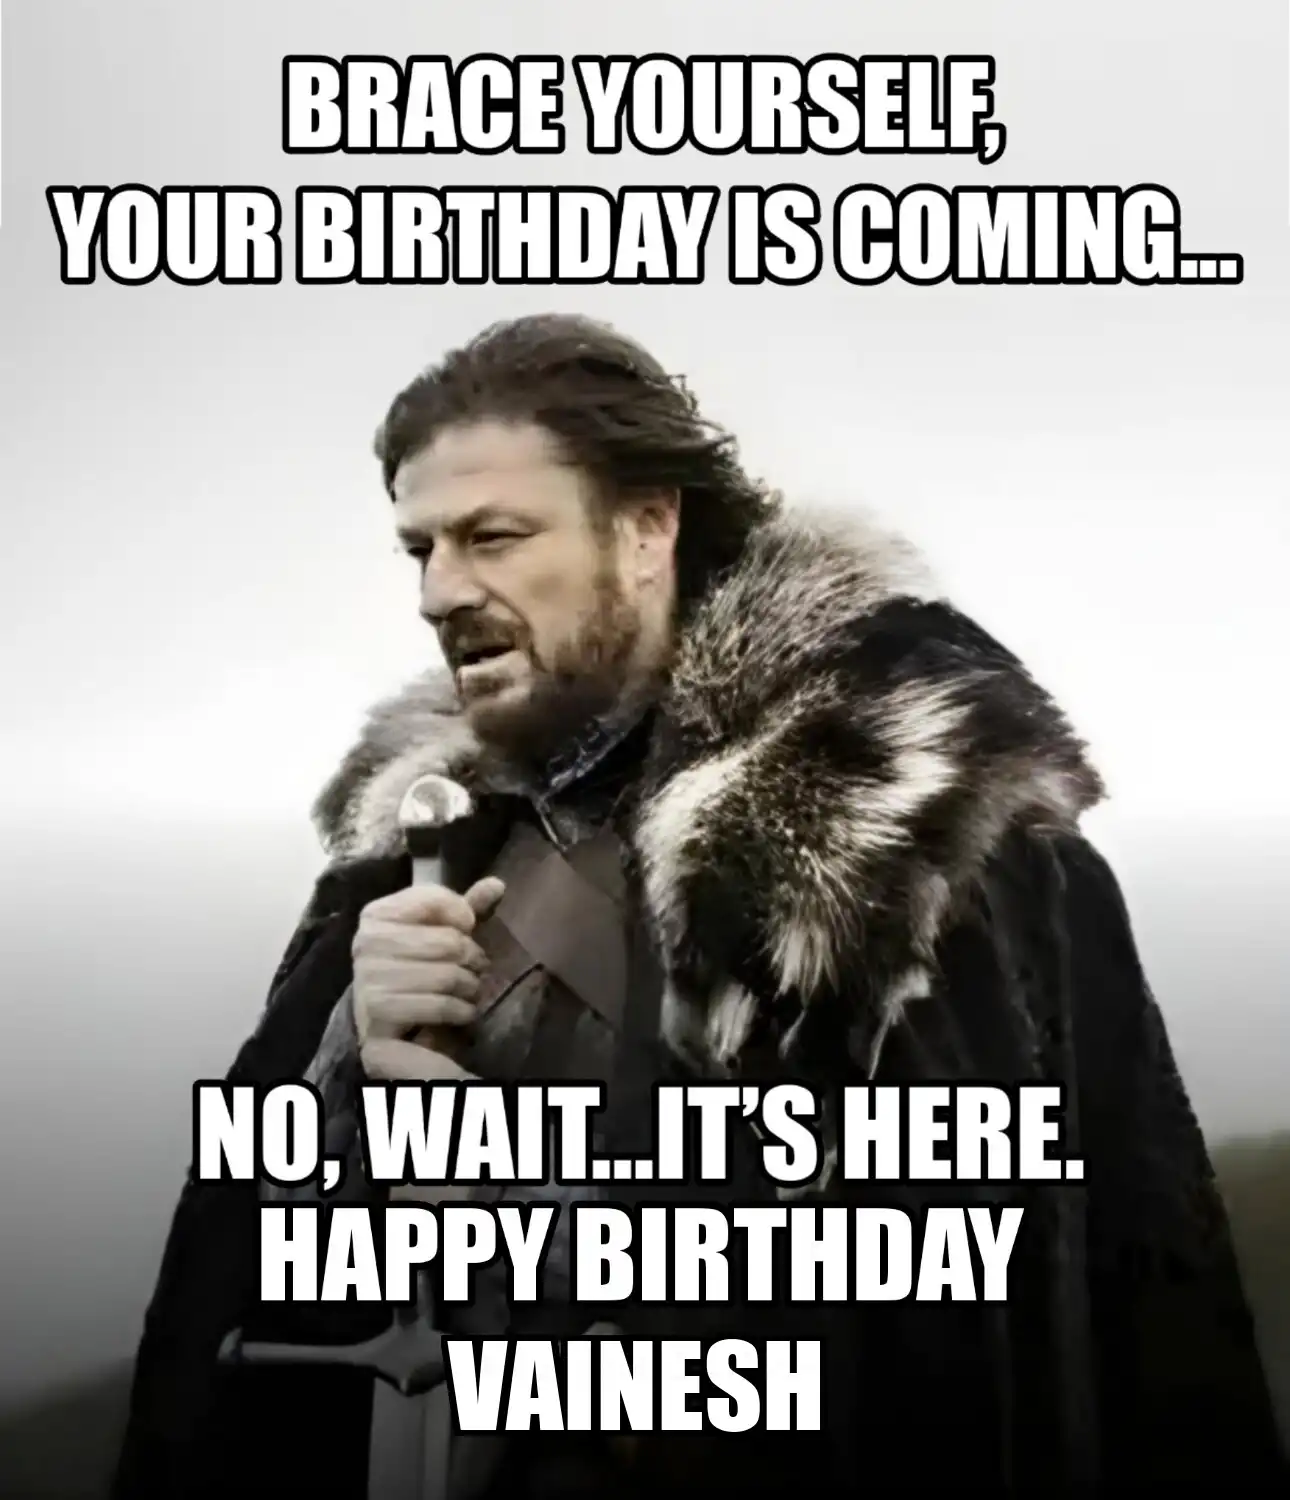 Happy Birthday Vainesh Brace Yourself Your Birthday Is Coming Meme